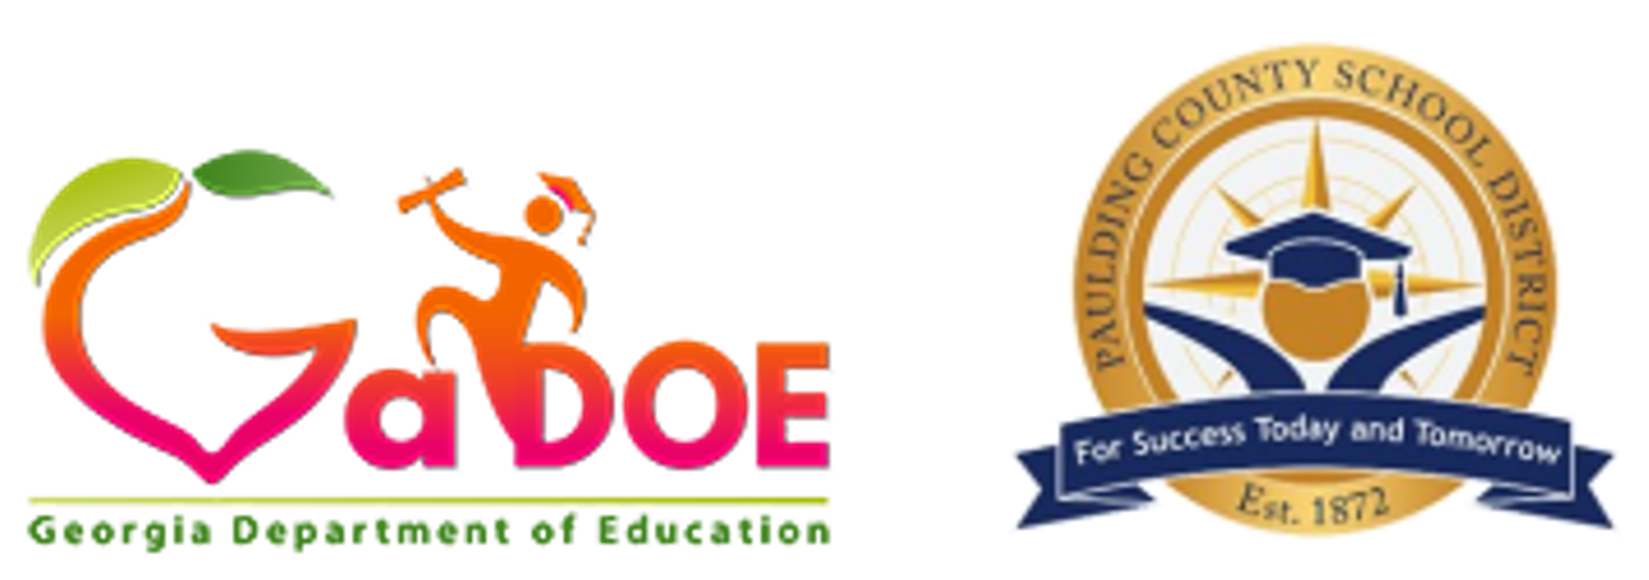 Georgia Department of Education logo beside the Paulding County School District Logo